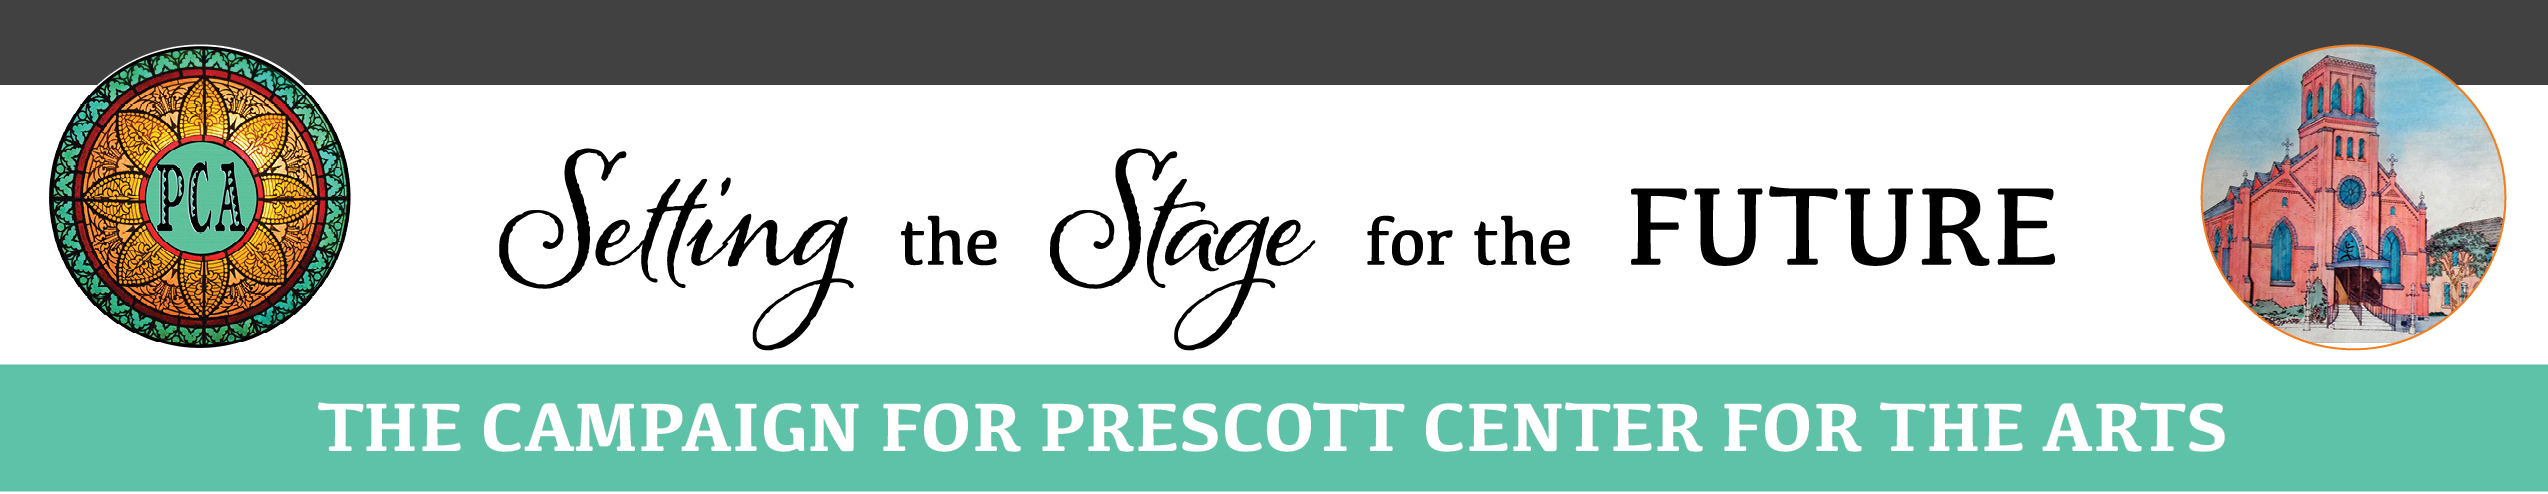 Prescott Center for the Arts logo